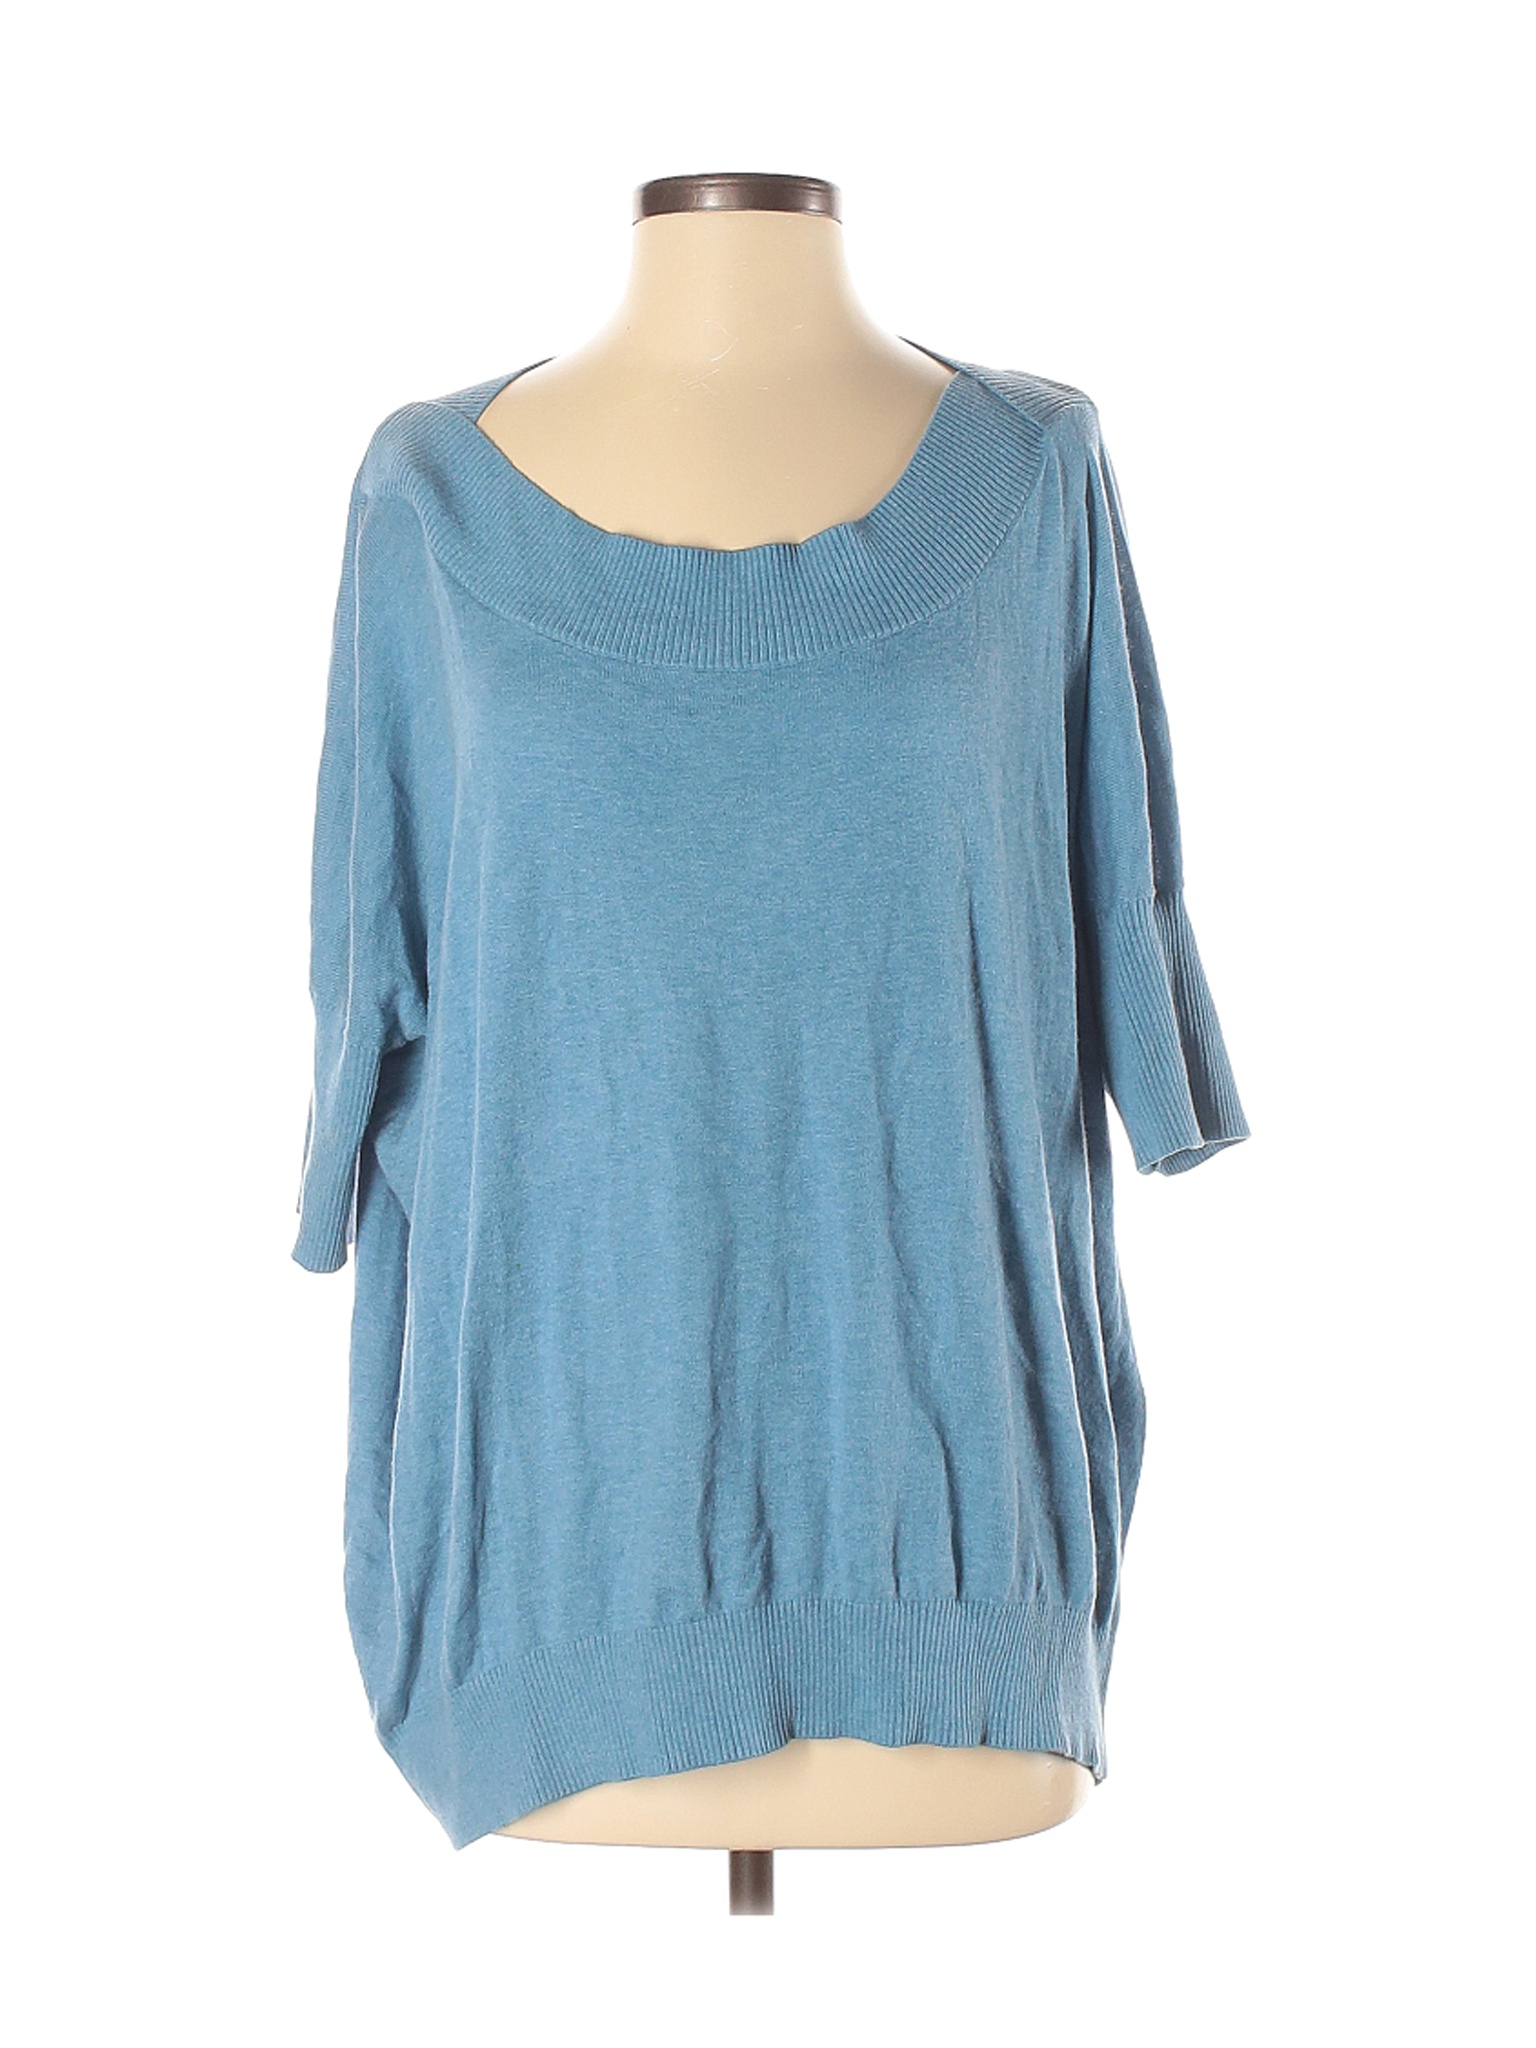 CAbi Women Blue Pullover Sweater S | eBay